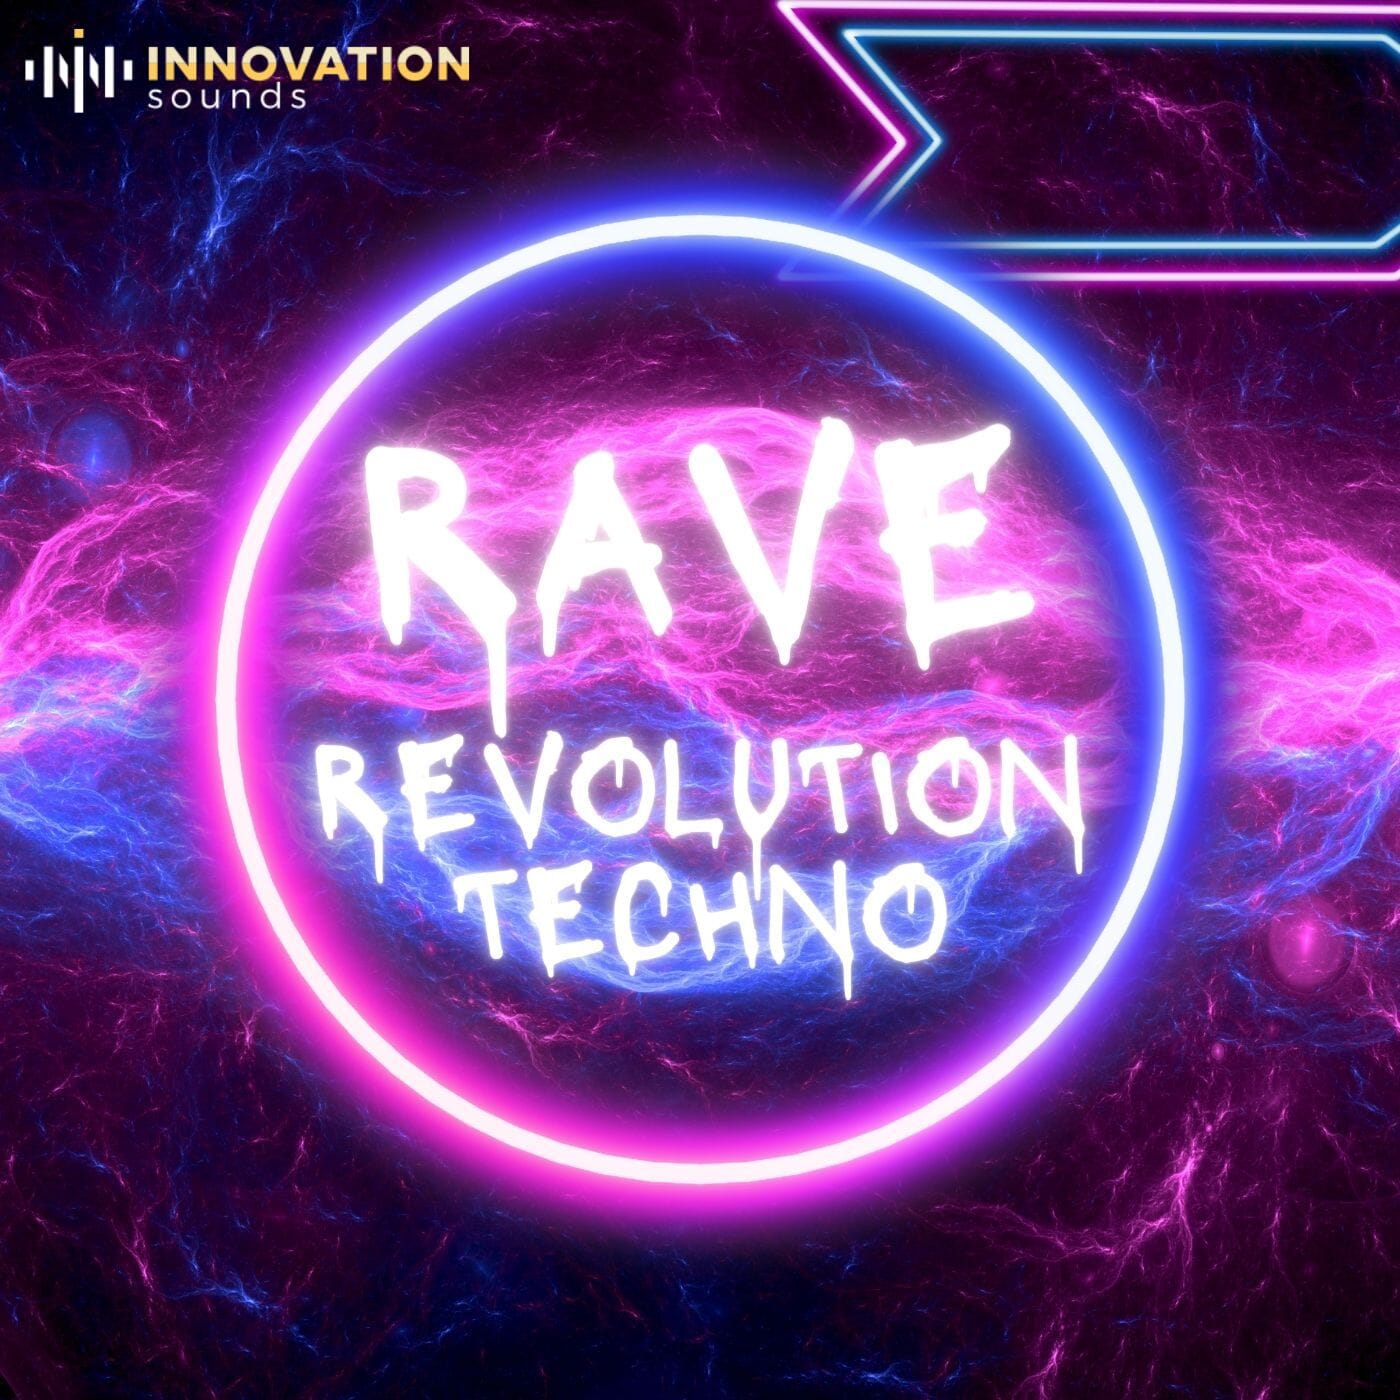 Rave Revolution Techno - Modern club techno Sample Pack Innovation Sounds